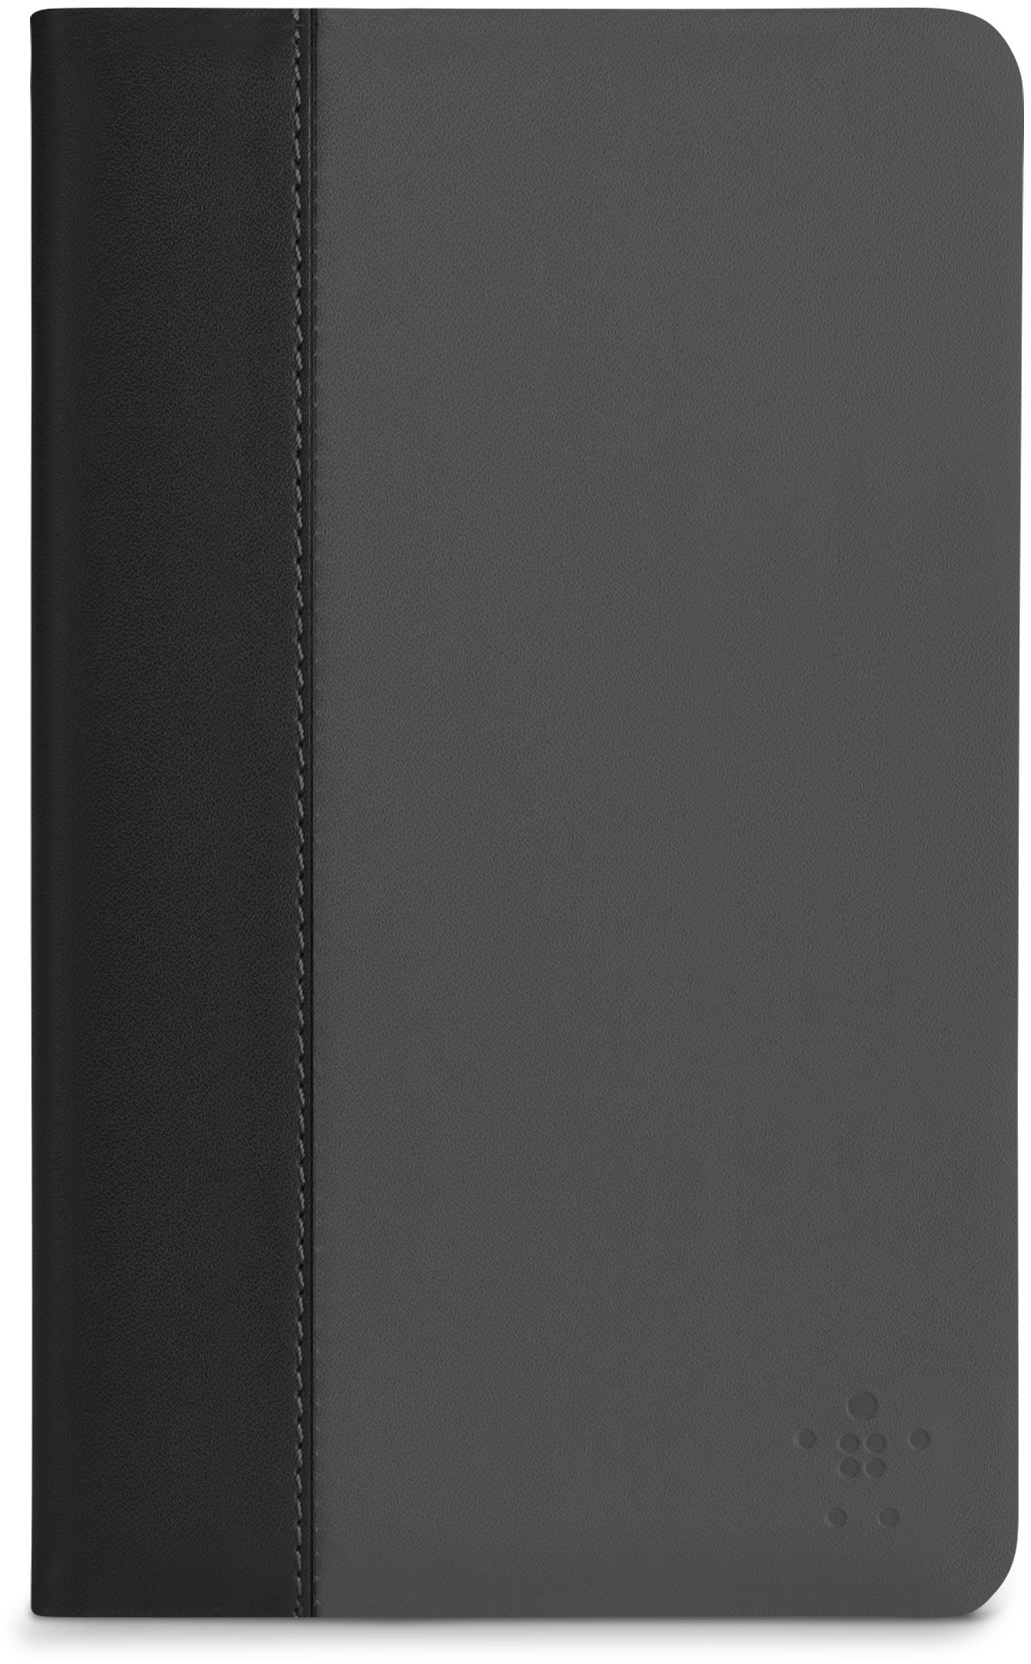 Belkin F7P335btC00 20,3 cm (8 Zoll) Classic Cover mit Standfunktion für Samsung Galaxy Tab A schwarz/grau